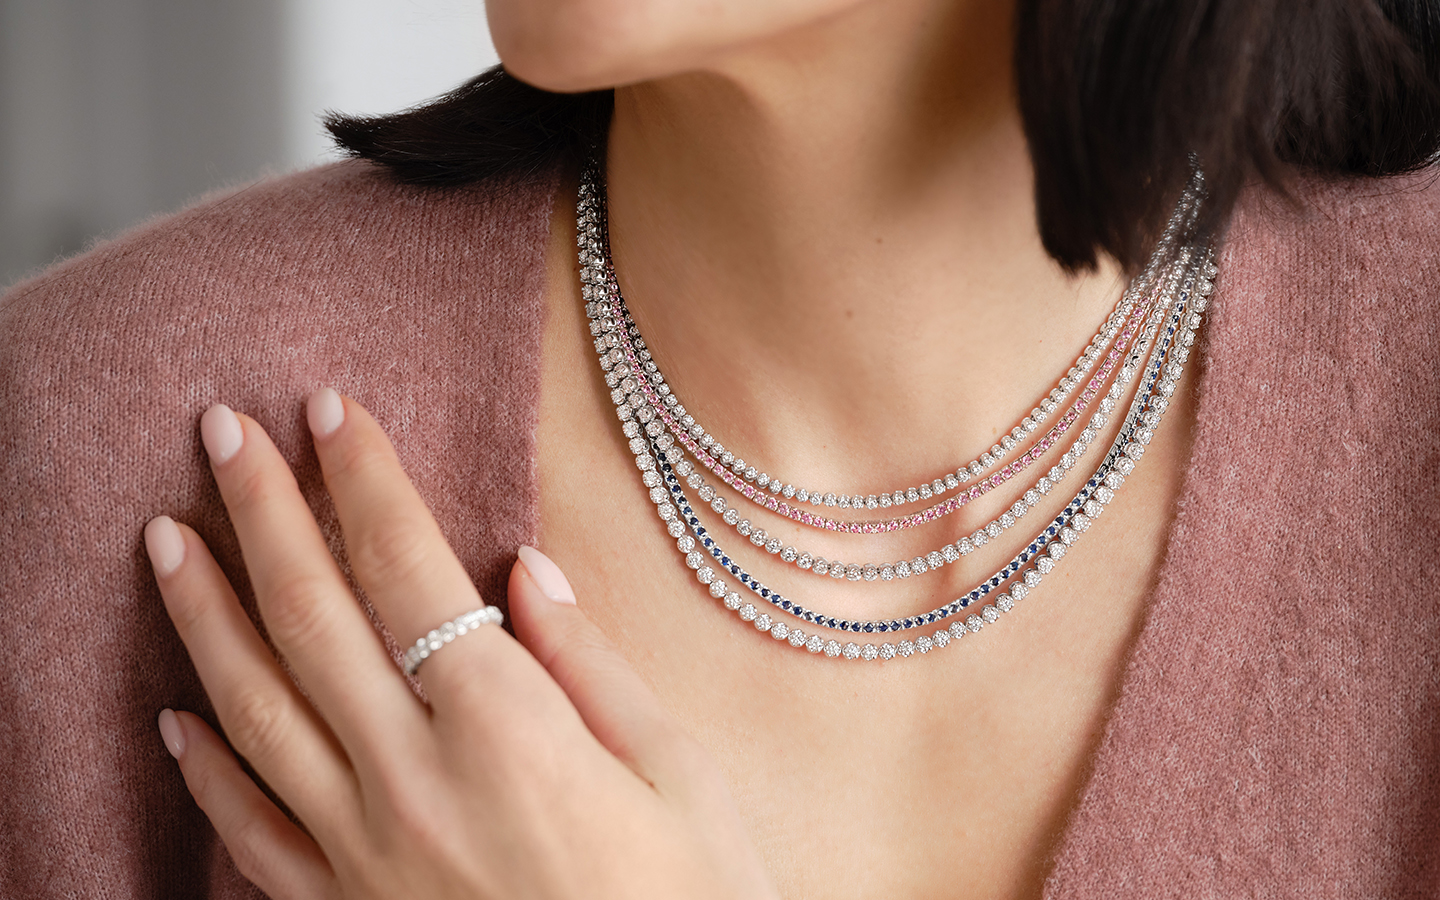 Tennis necklaces in diamonds and gemstones